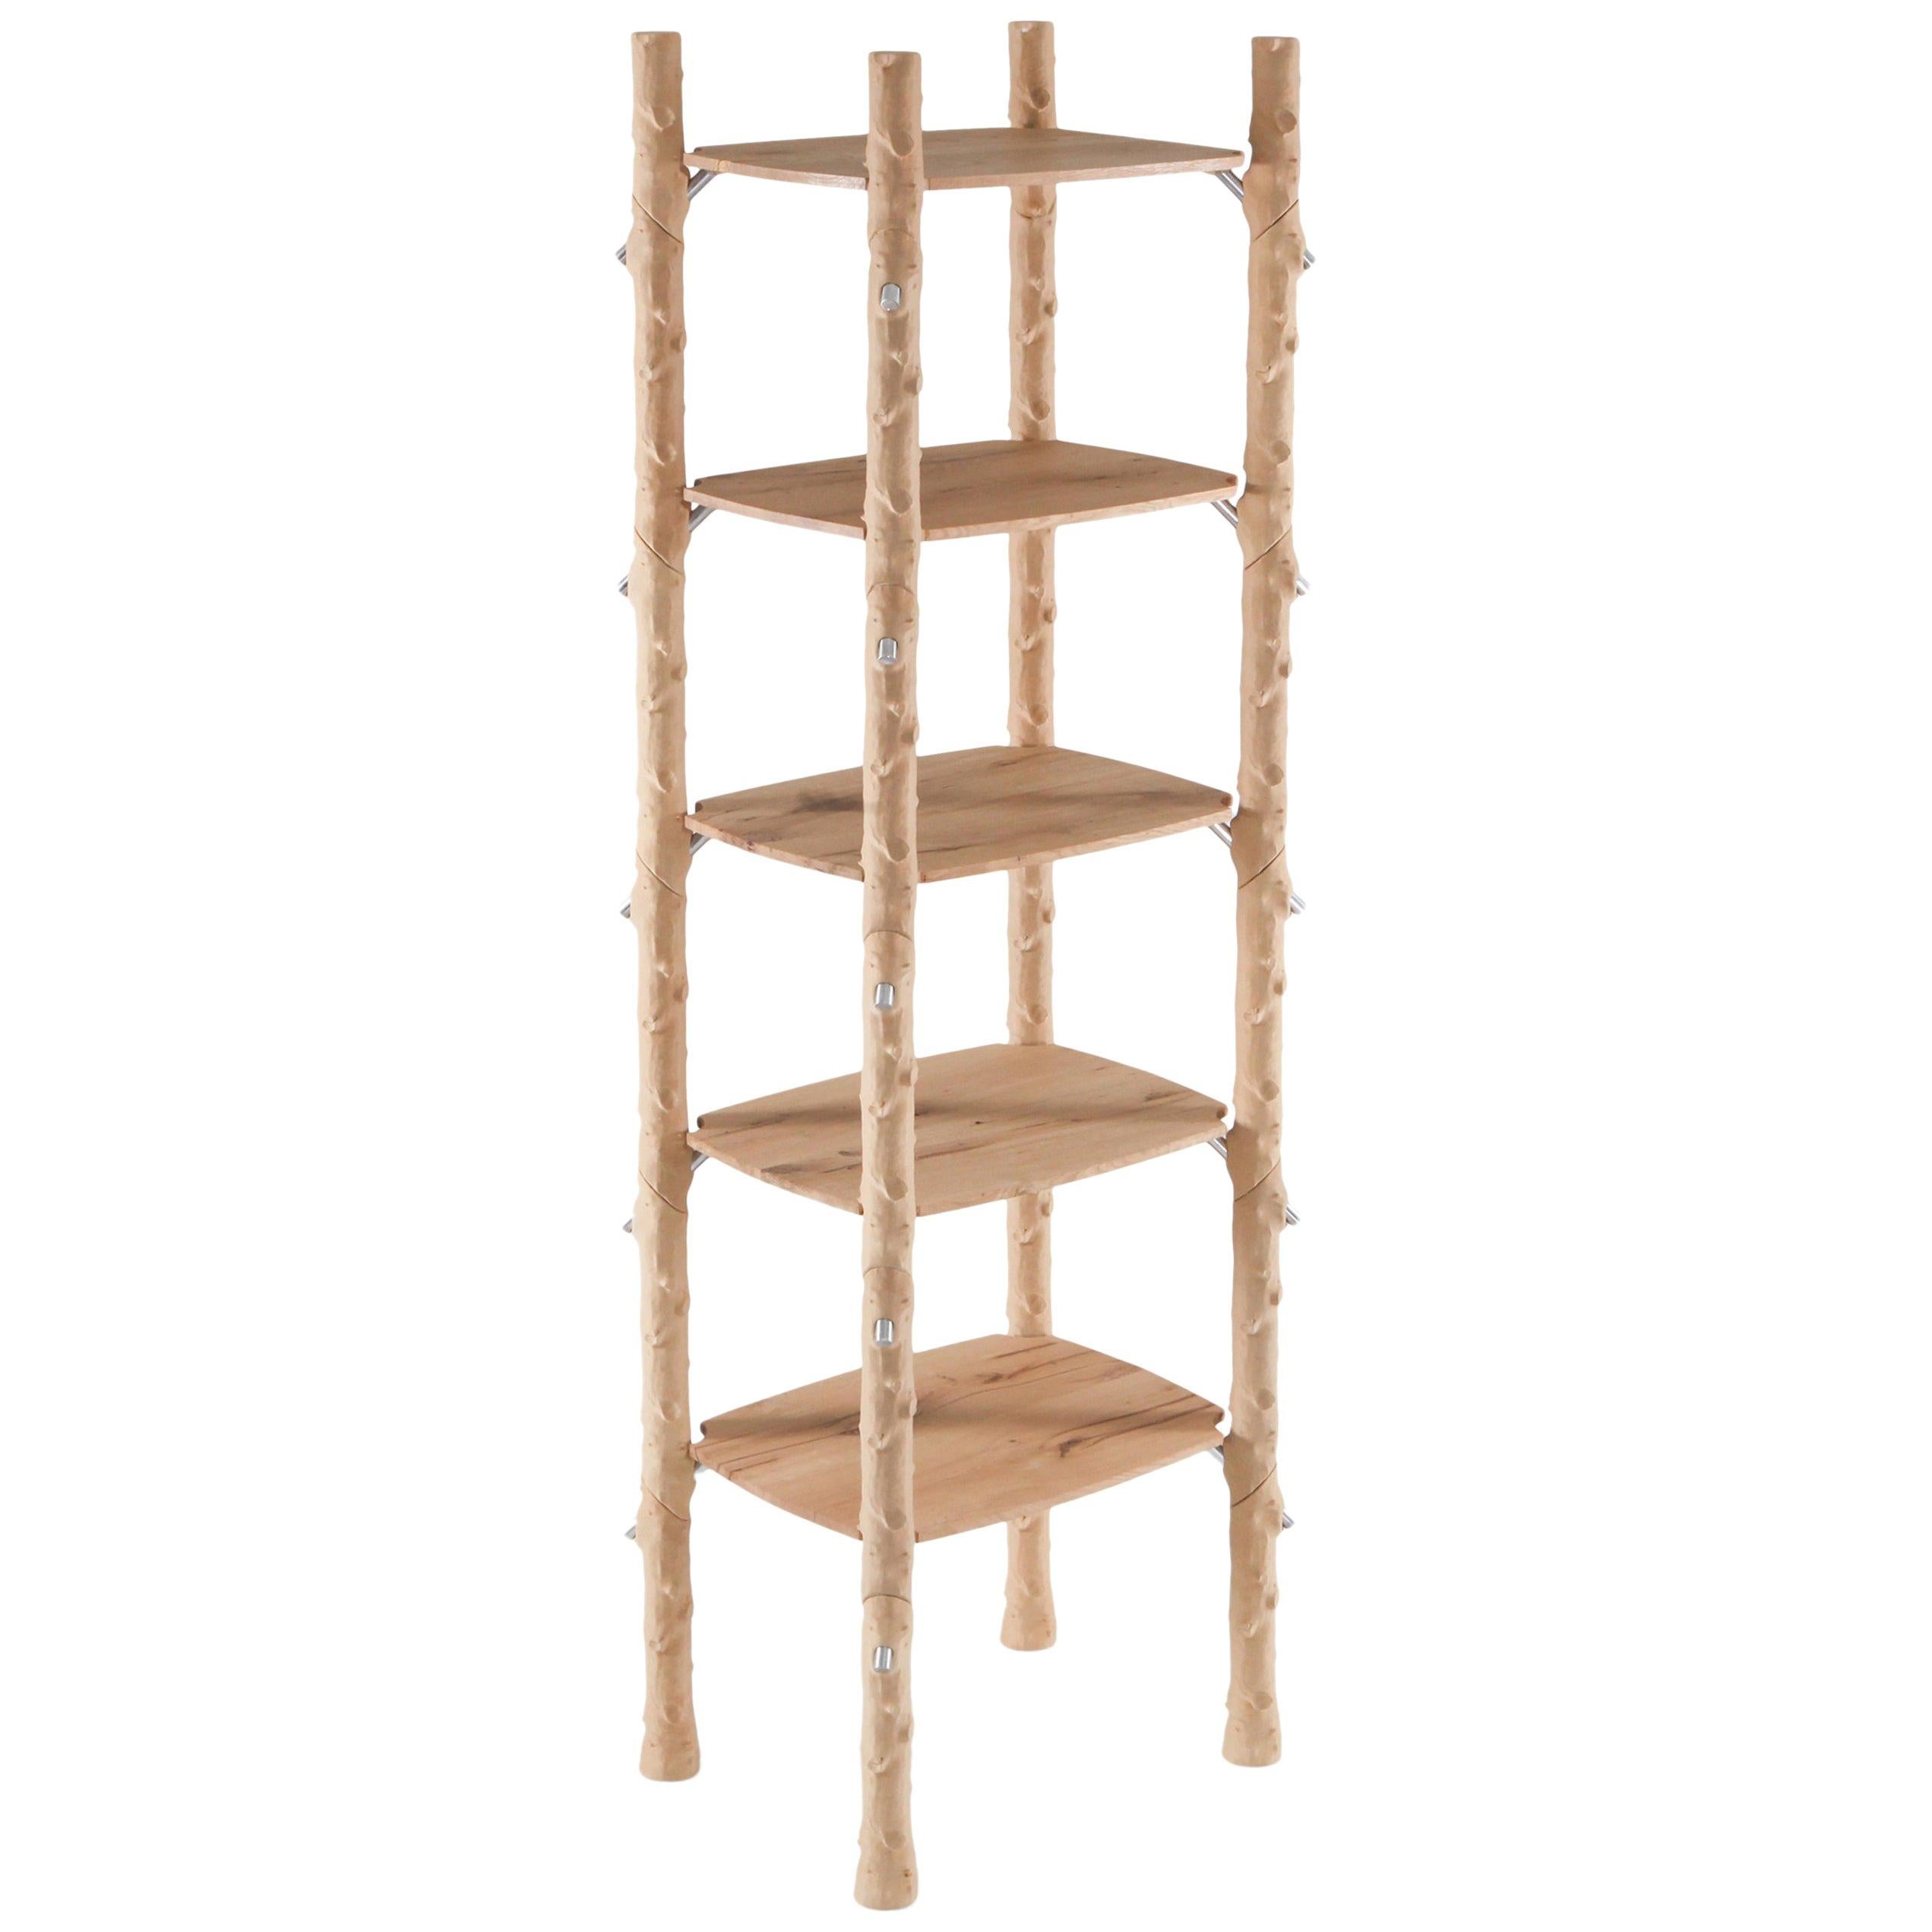 'Branch-Ish Shelf' Contemporary Free Standing Shelves, Schimmel & Schweikle 2020 For Sale